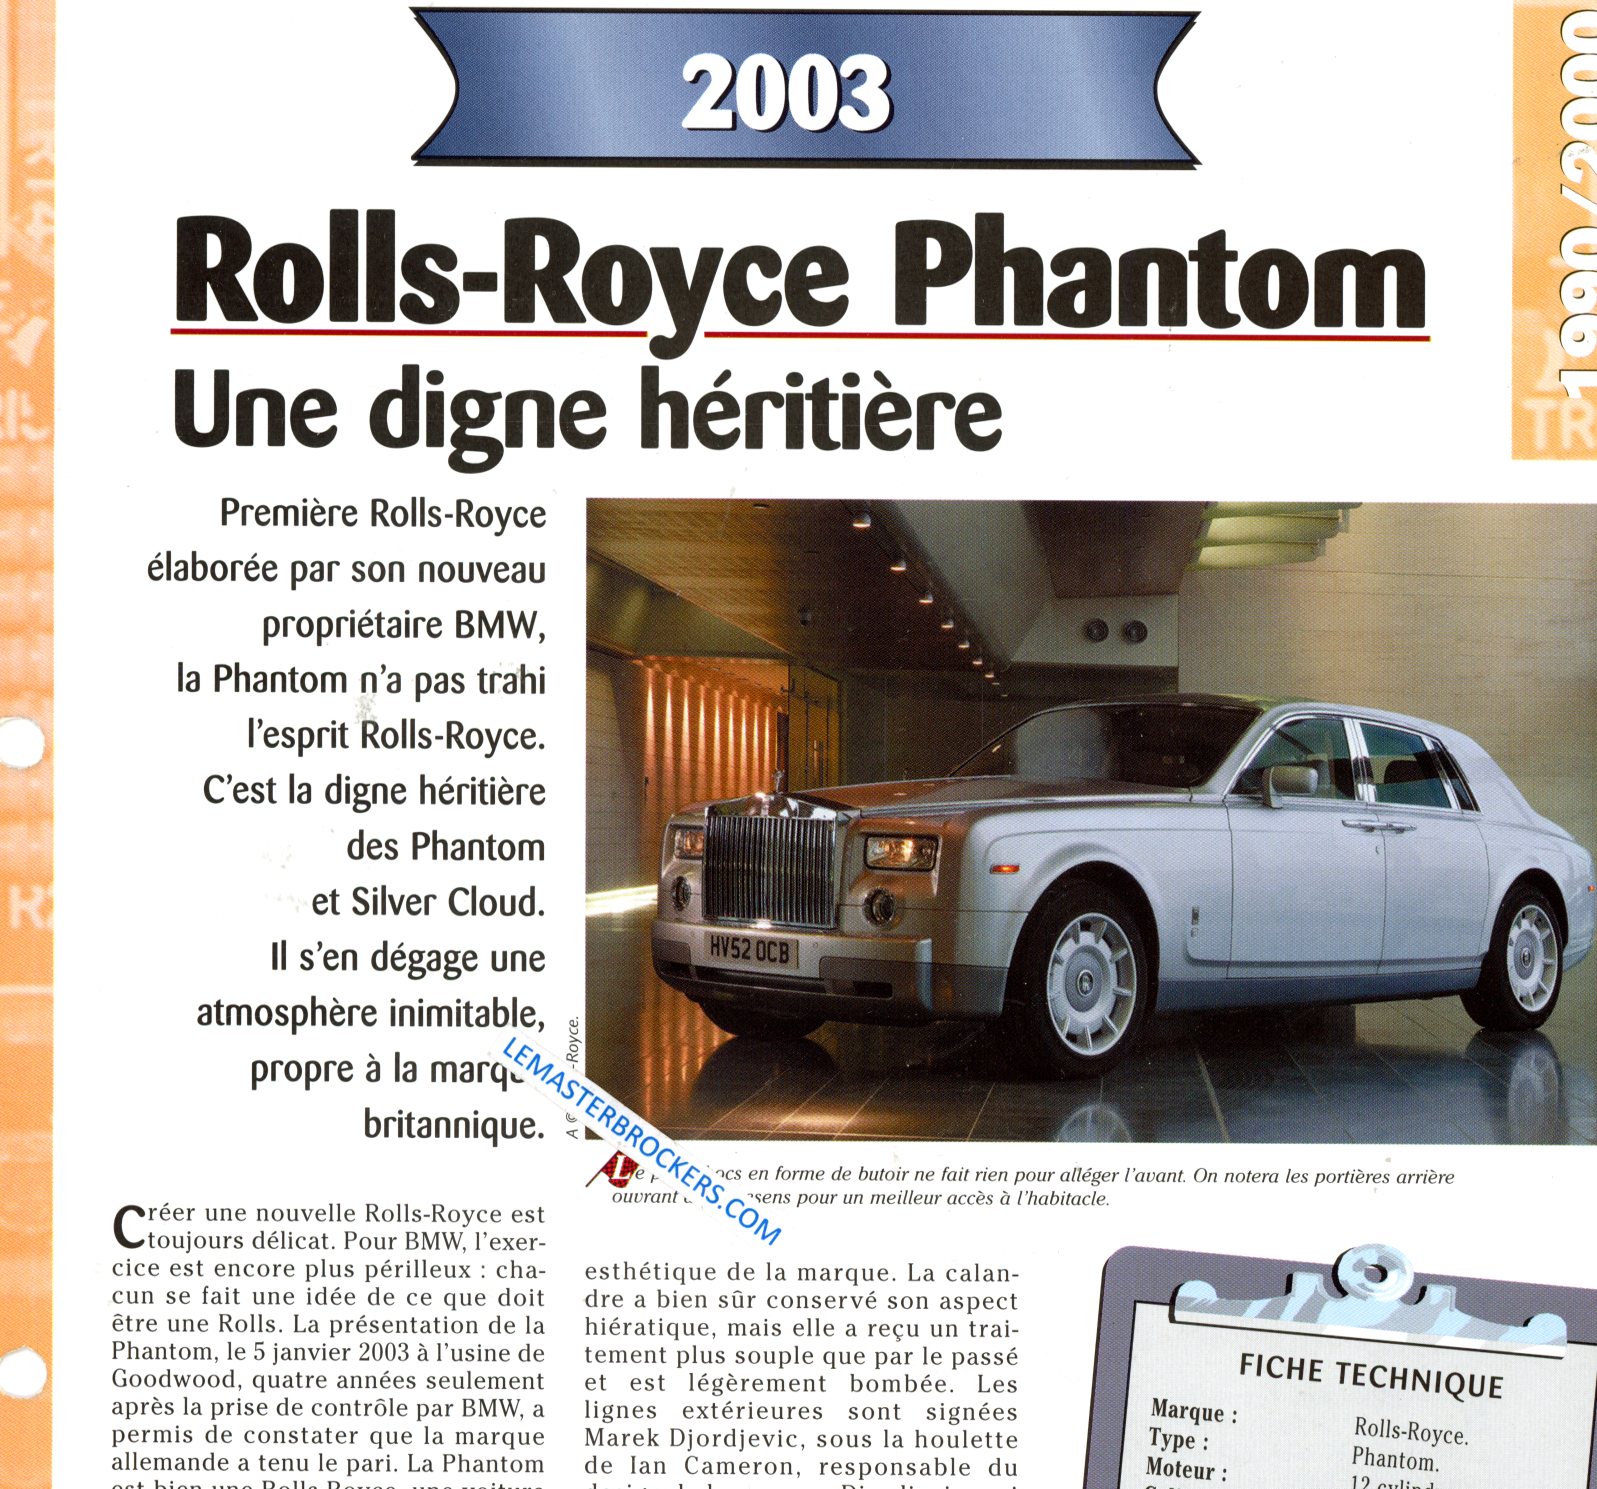 ROLLS-ROYCE PHANTOM 2003 FICHE TECHNIQUE